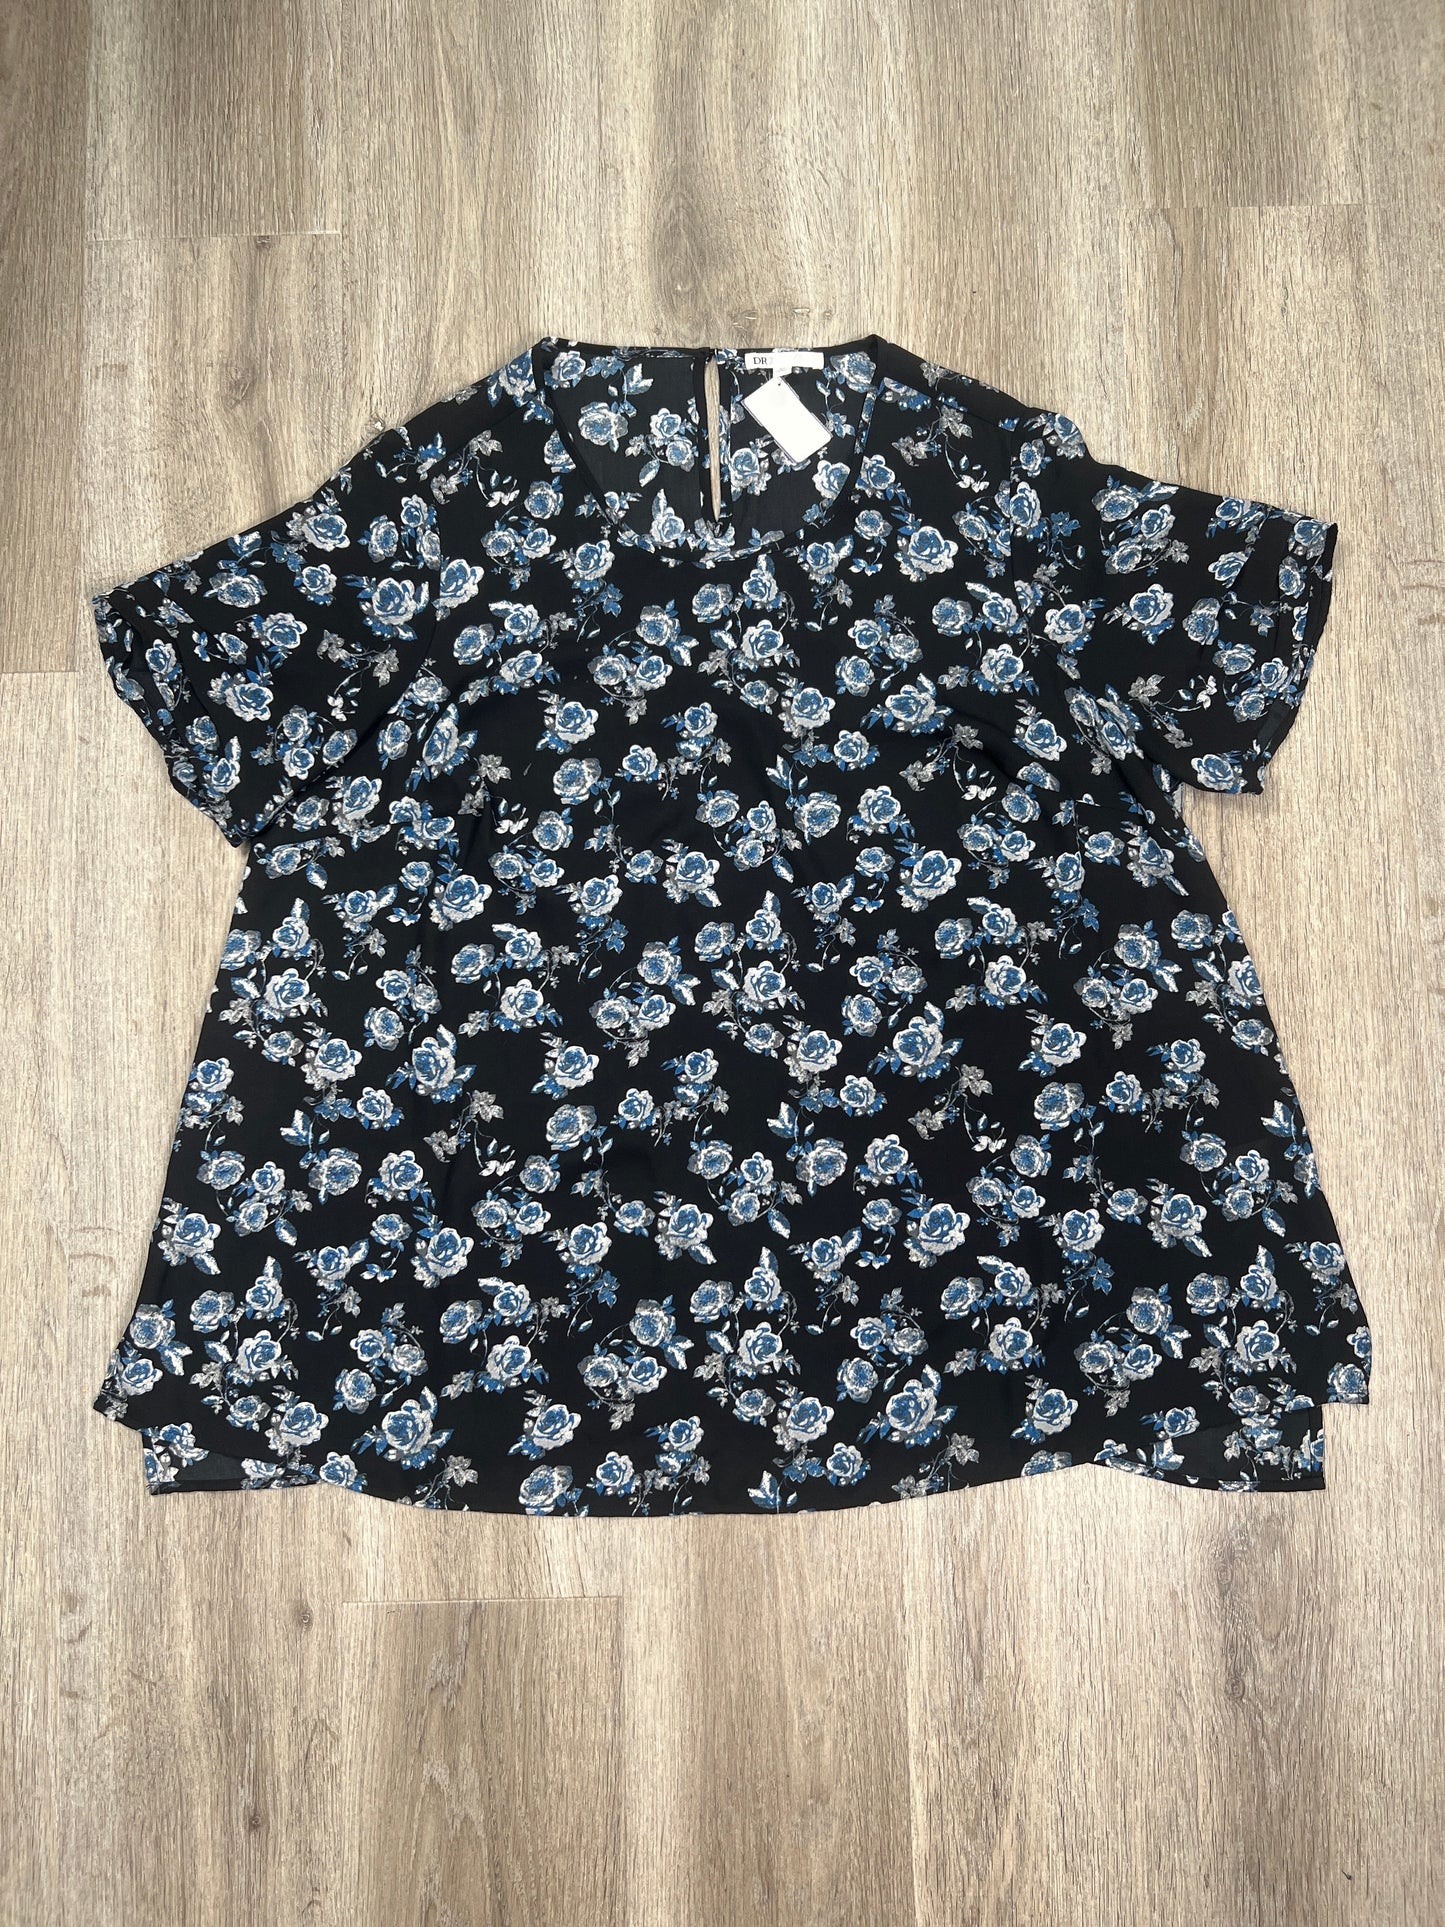 Floral Print Blouse Short Sleeve Dr2, Size 2x